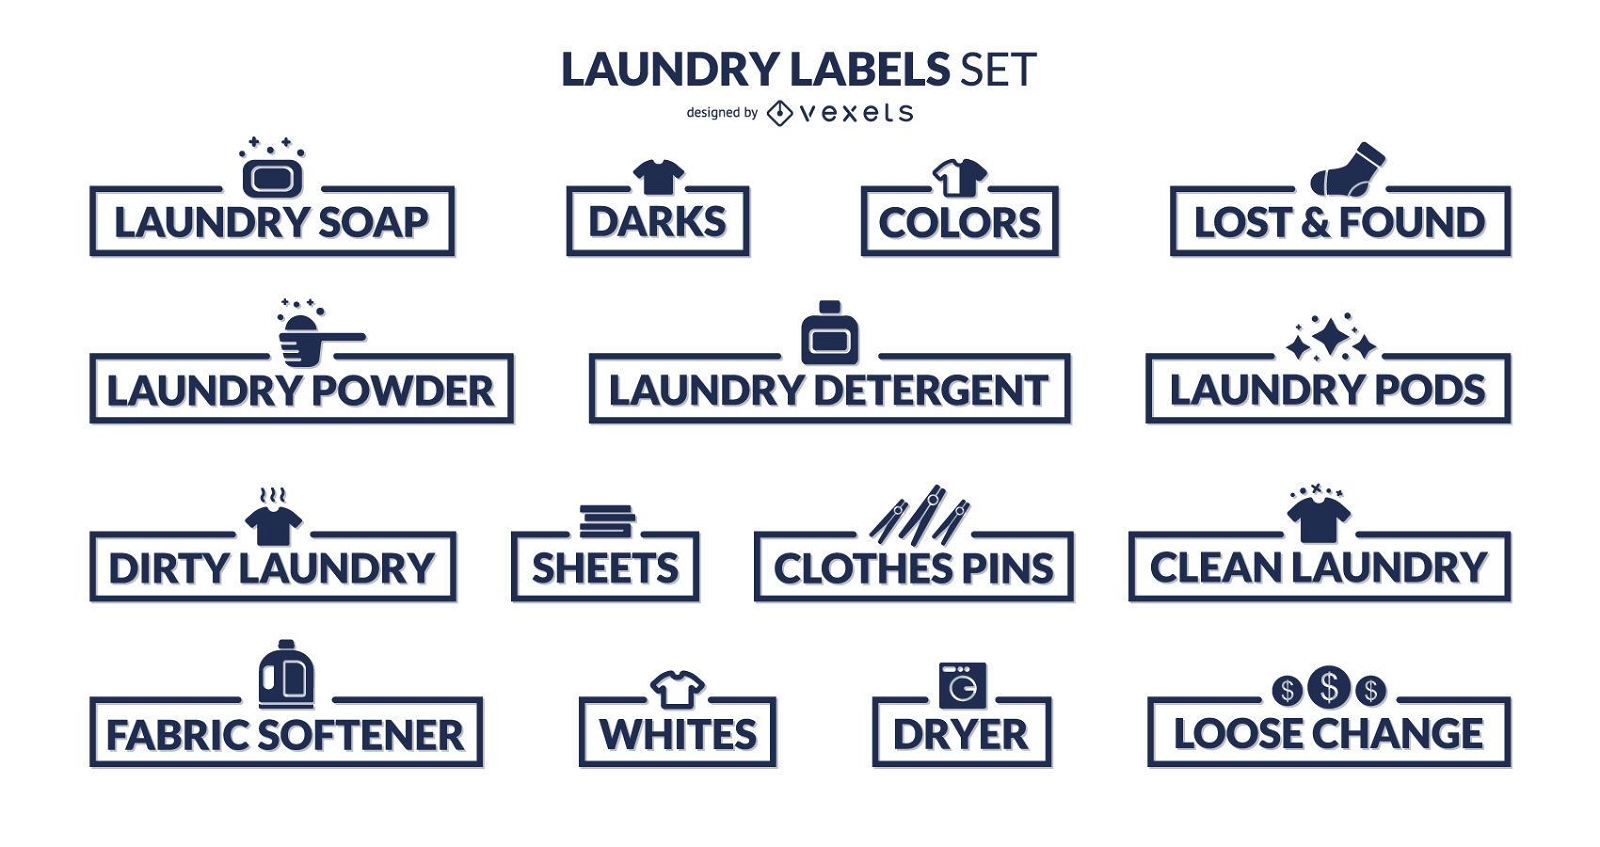 Laundry organization labels set